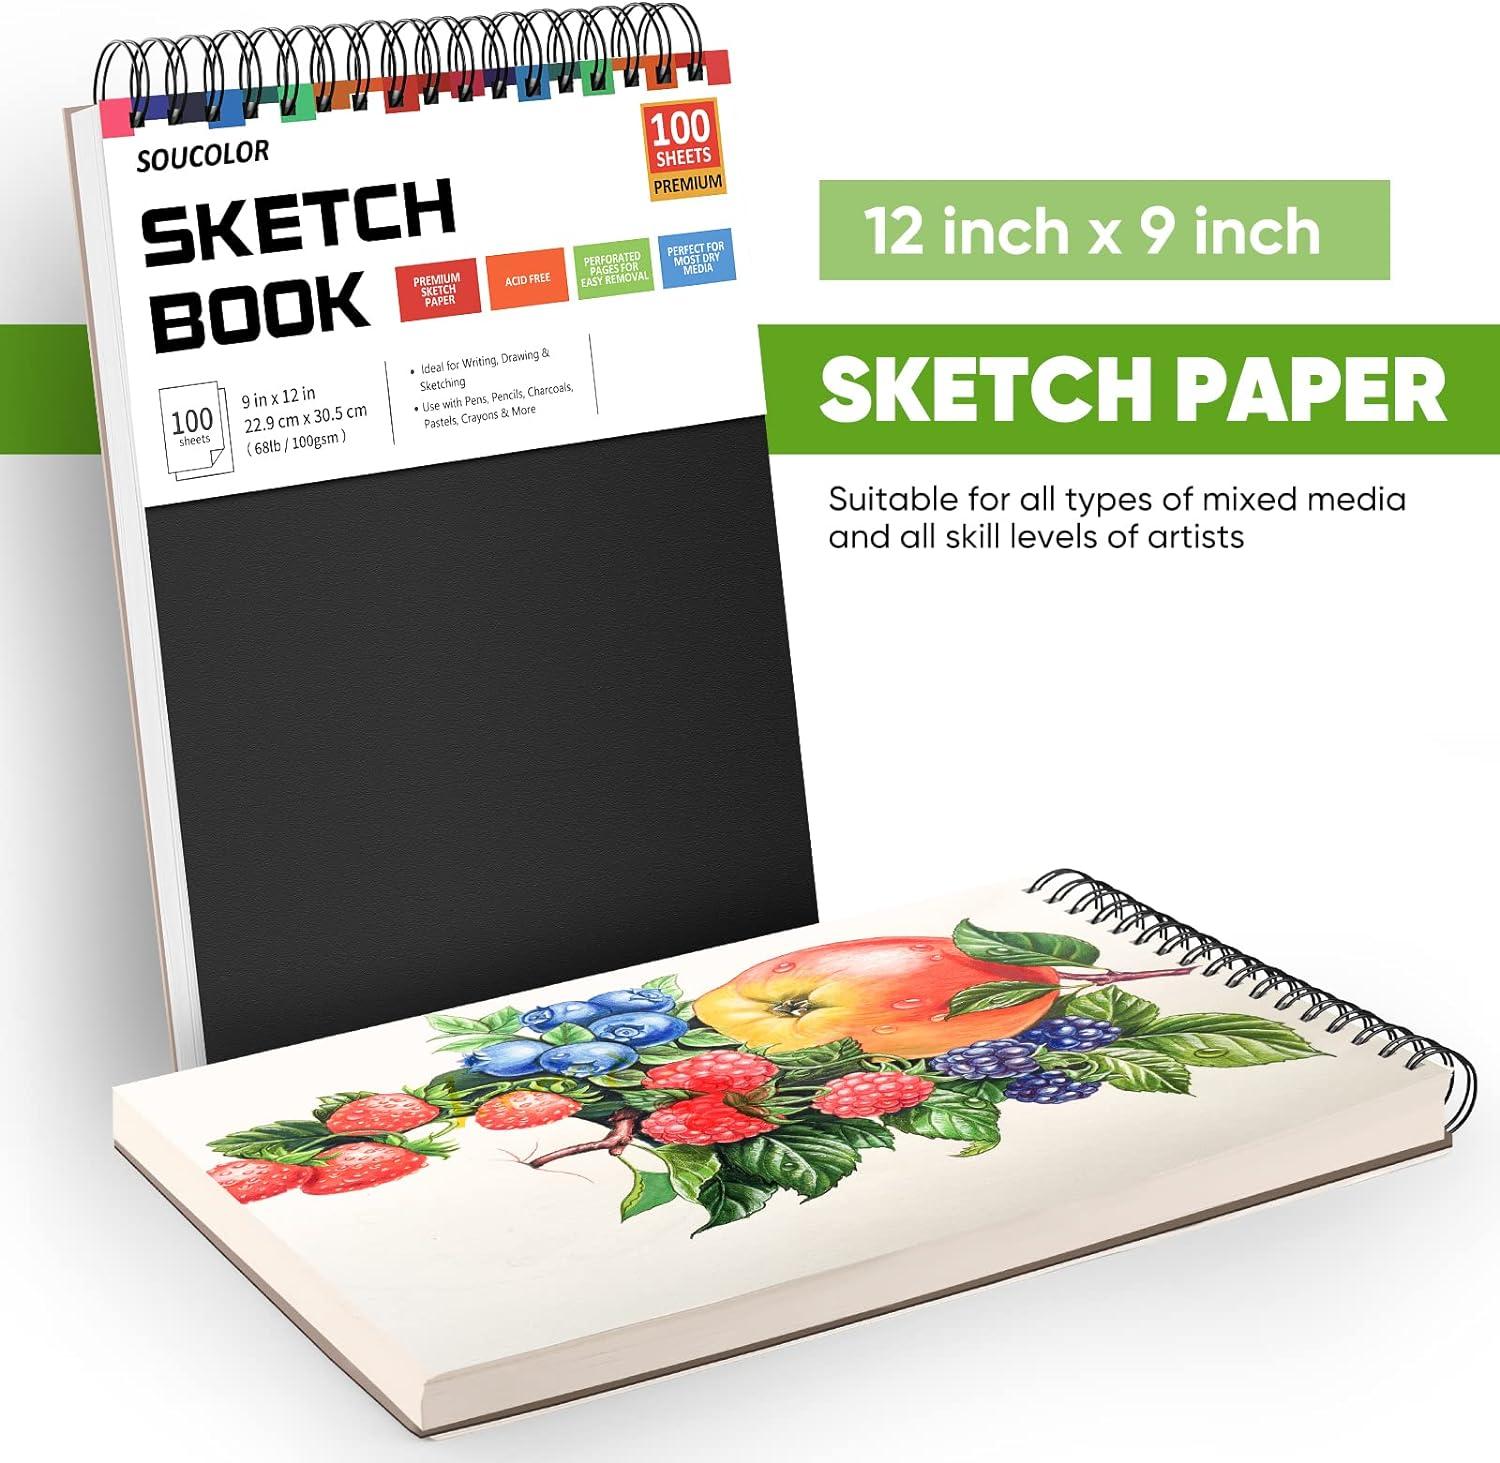 Soucolor 9 x 12 Sketch Book 1-Pack 100 Sheets Spiral Bound Art Sketchbook  Acid Free (68lb/100gsm) Artist Drawing Book Paper Painting Sketching Pad  Black 1 Pack